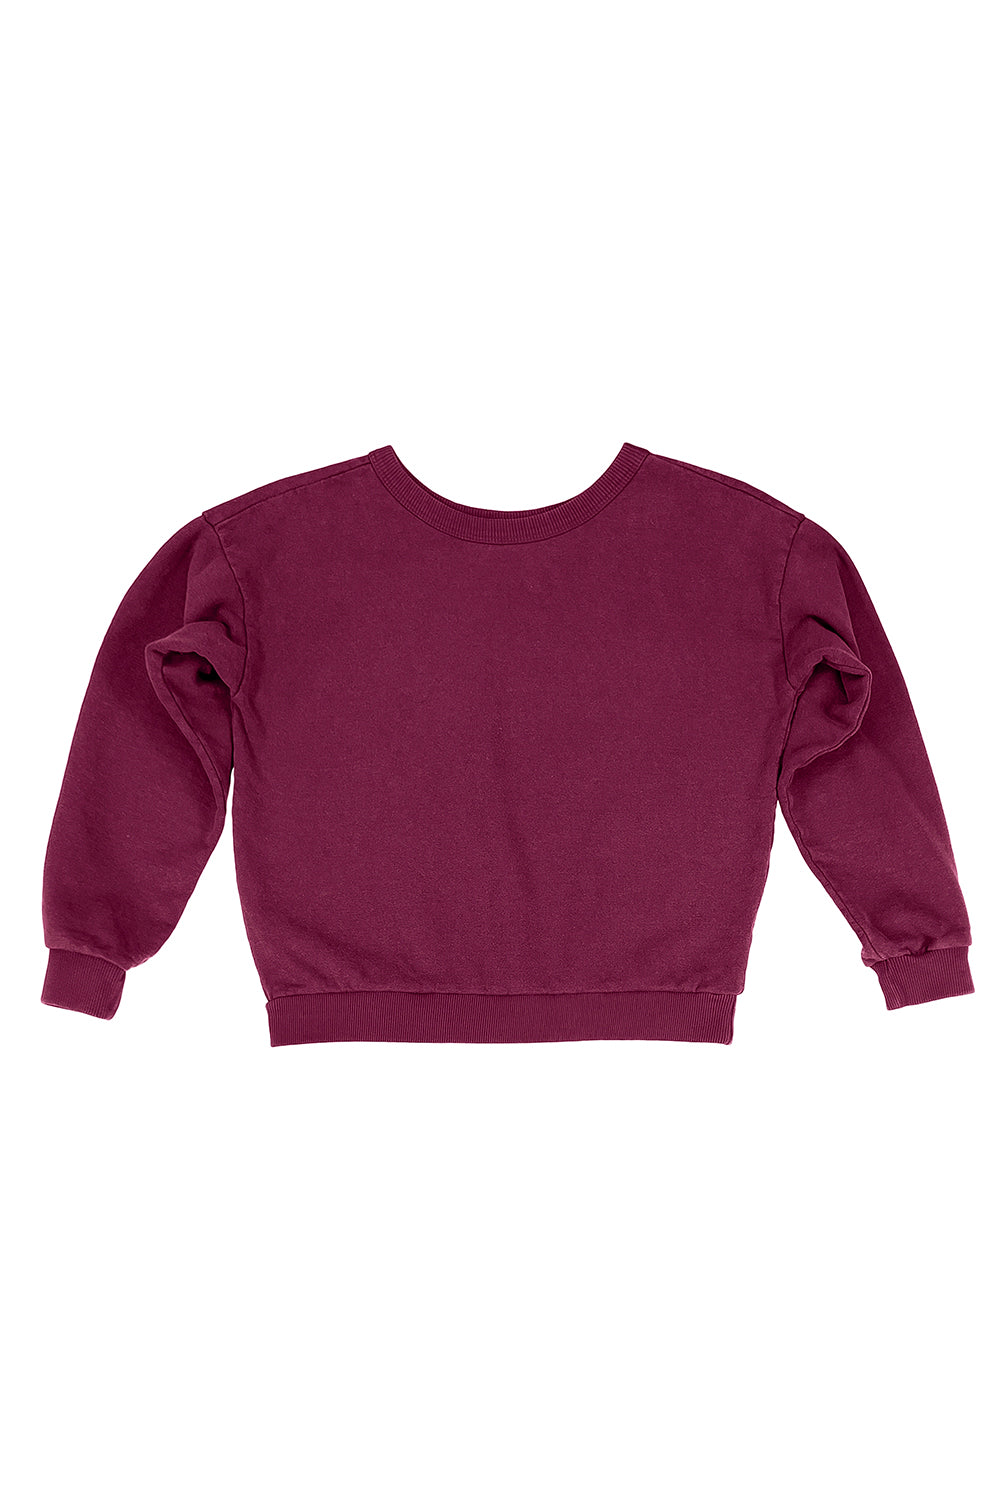 Laguna Cropped Sweatshirt | Jungmaven Hemp Clothing & Accessories / Color: Burgundy